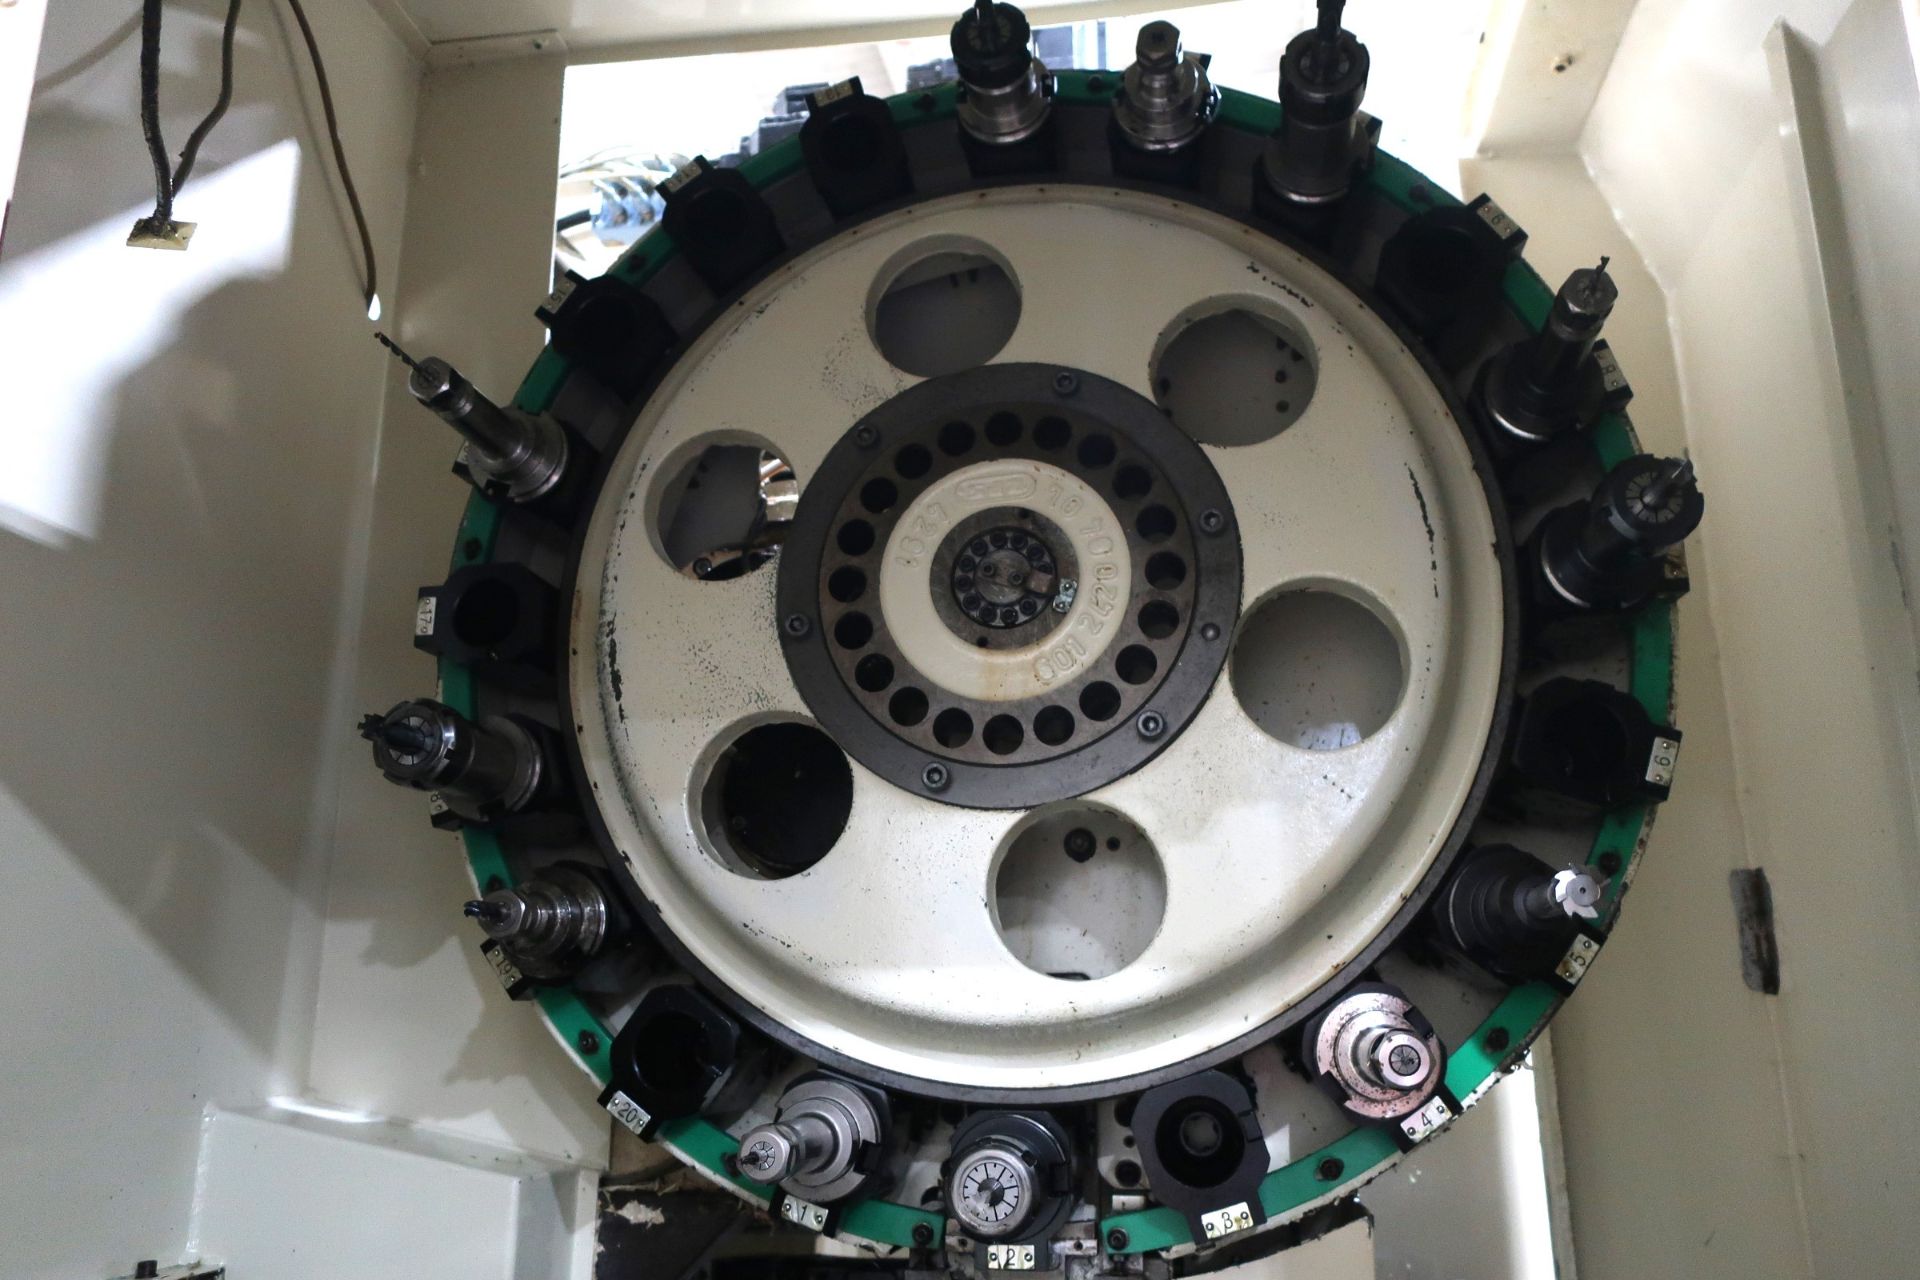 OKUMA MC-V3016 5-AXIS CNC VERTICAL MACHINING CENTER, S/N 0038, NEW 2003 - Image 5 of 11